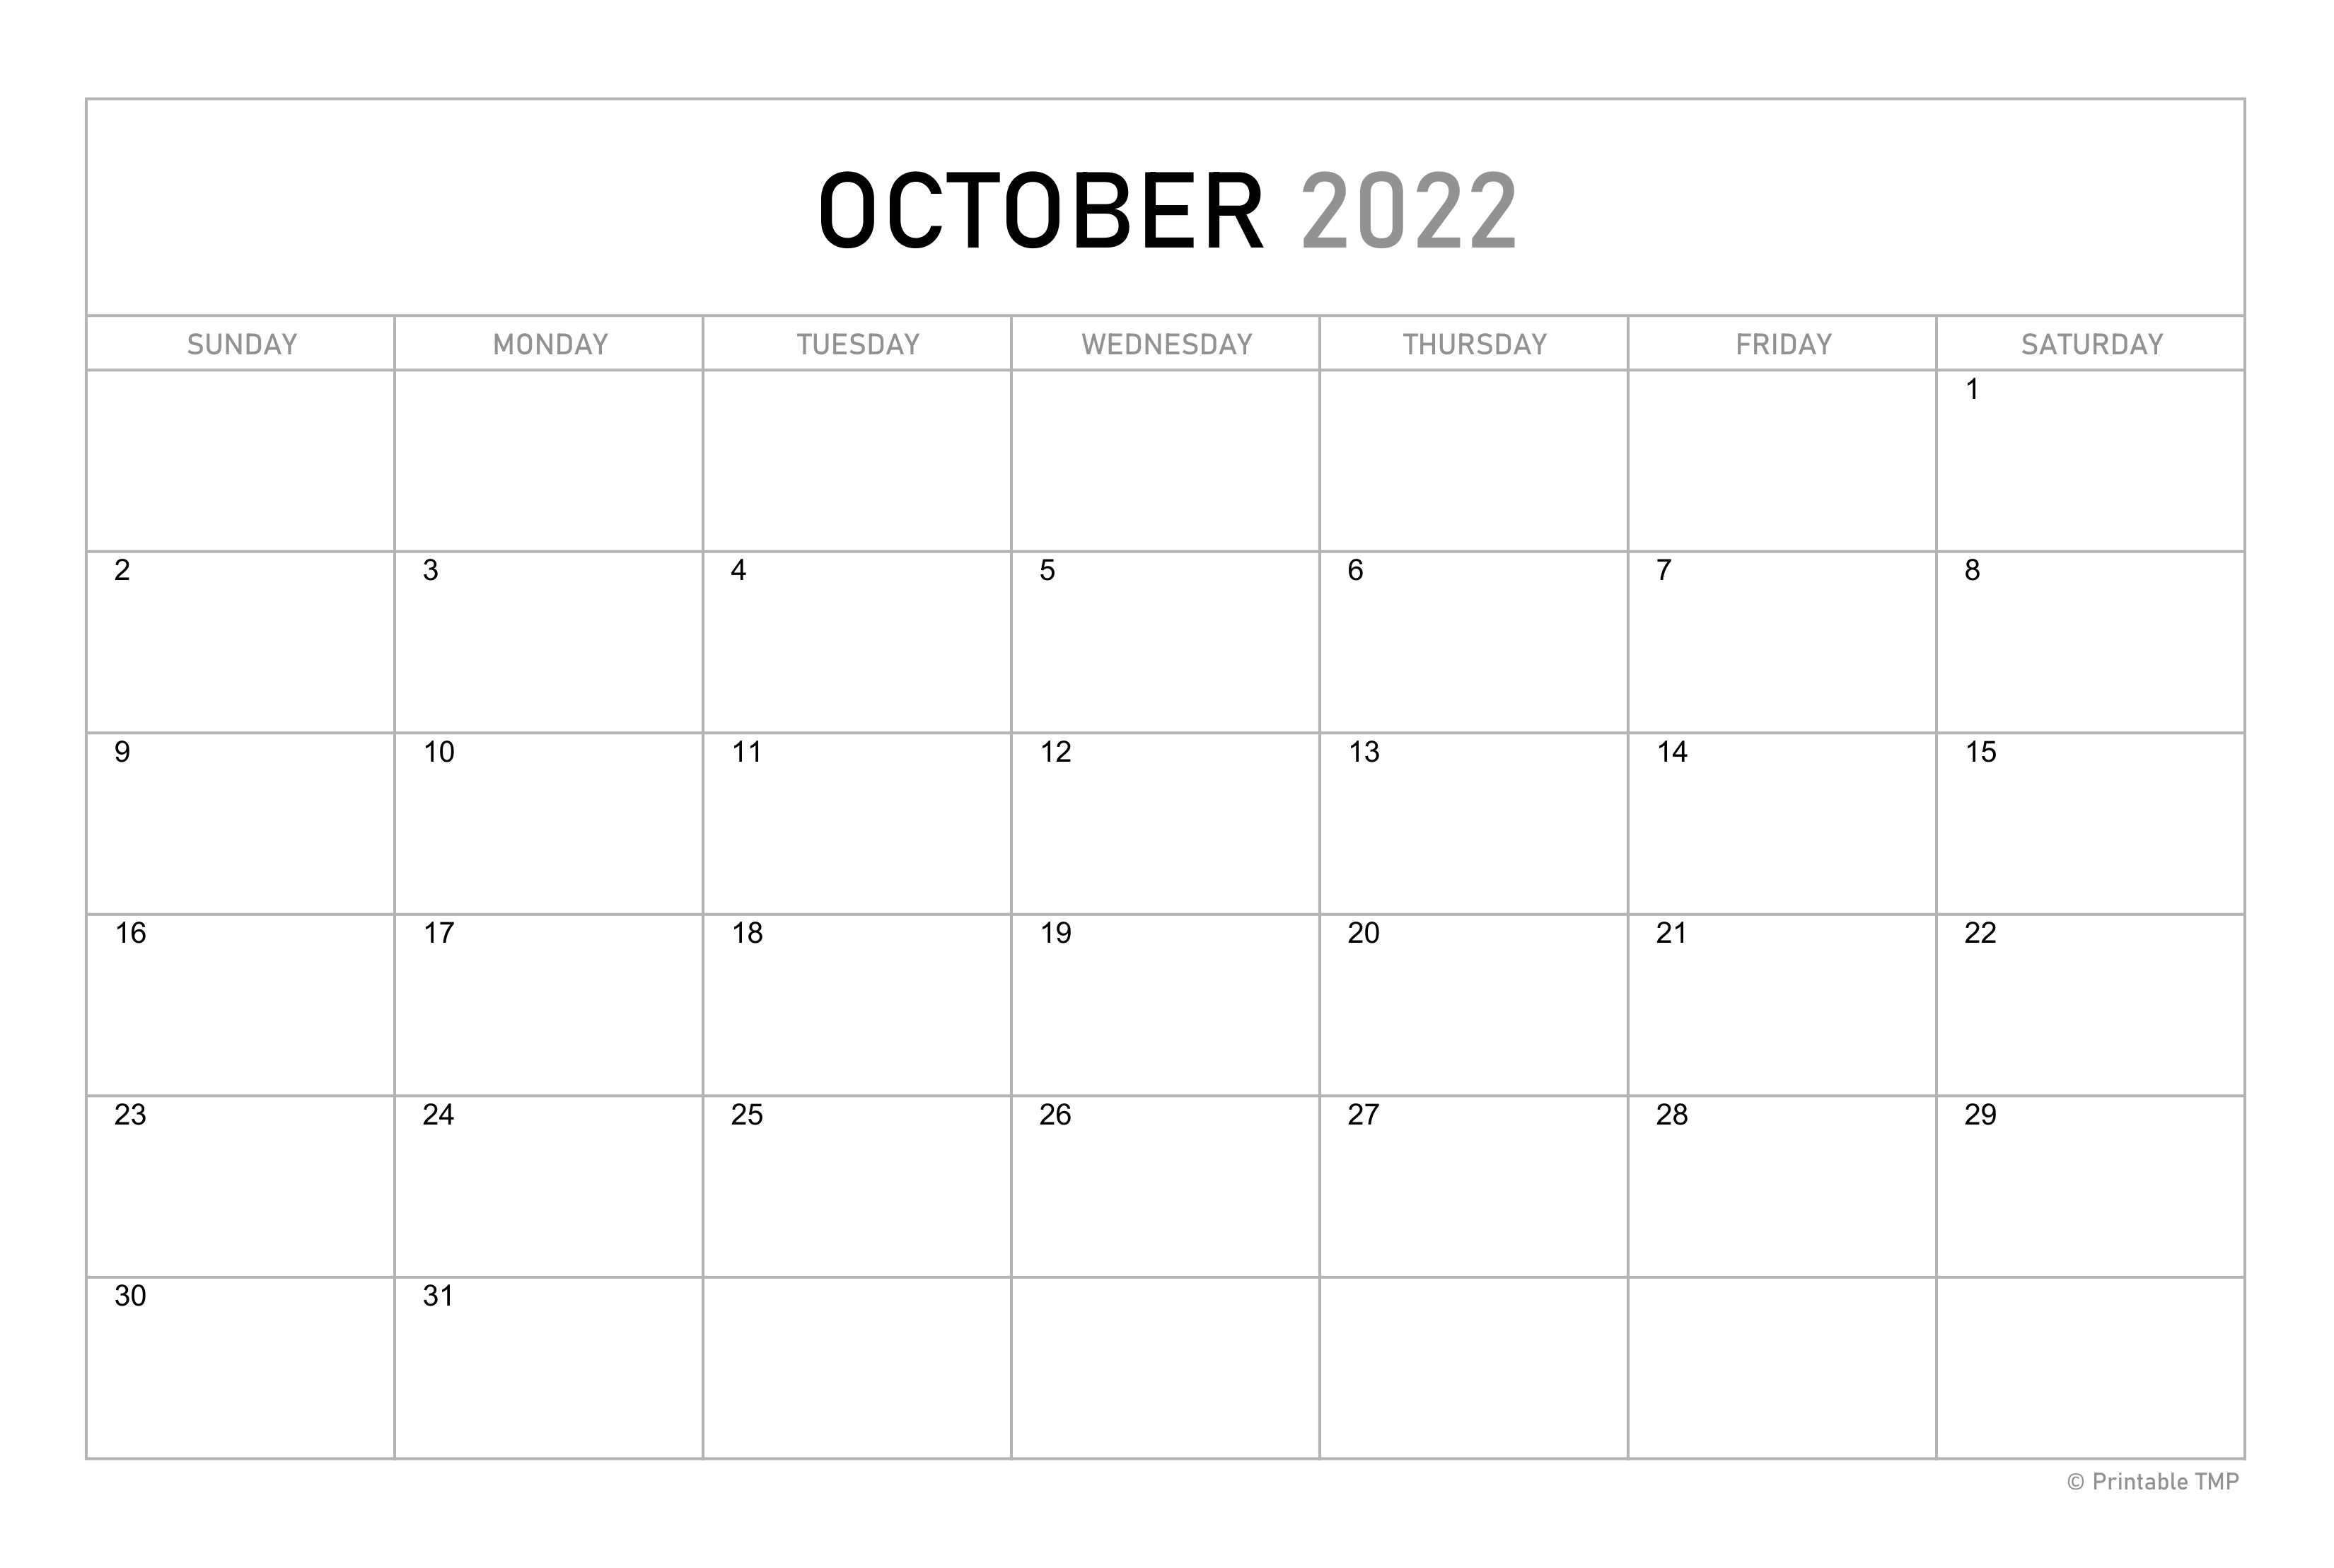 free-printable-october-2022-calendar-list-of-holidays